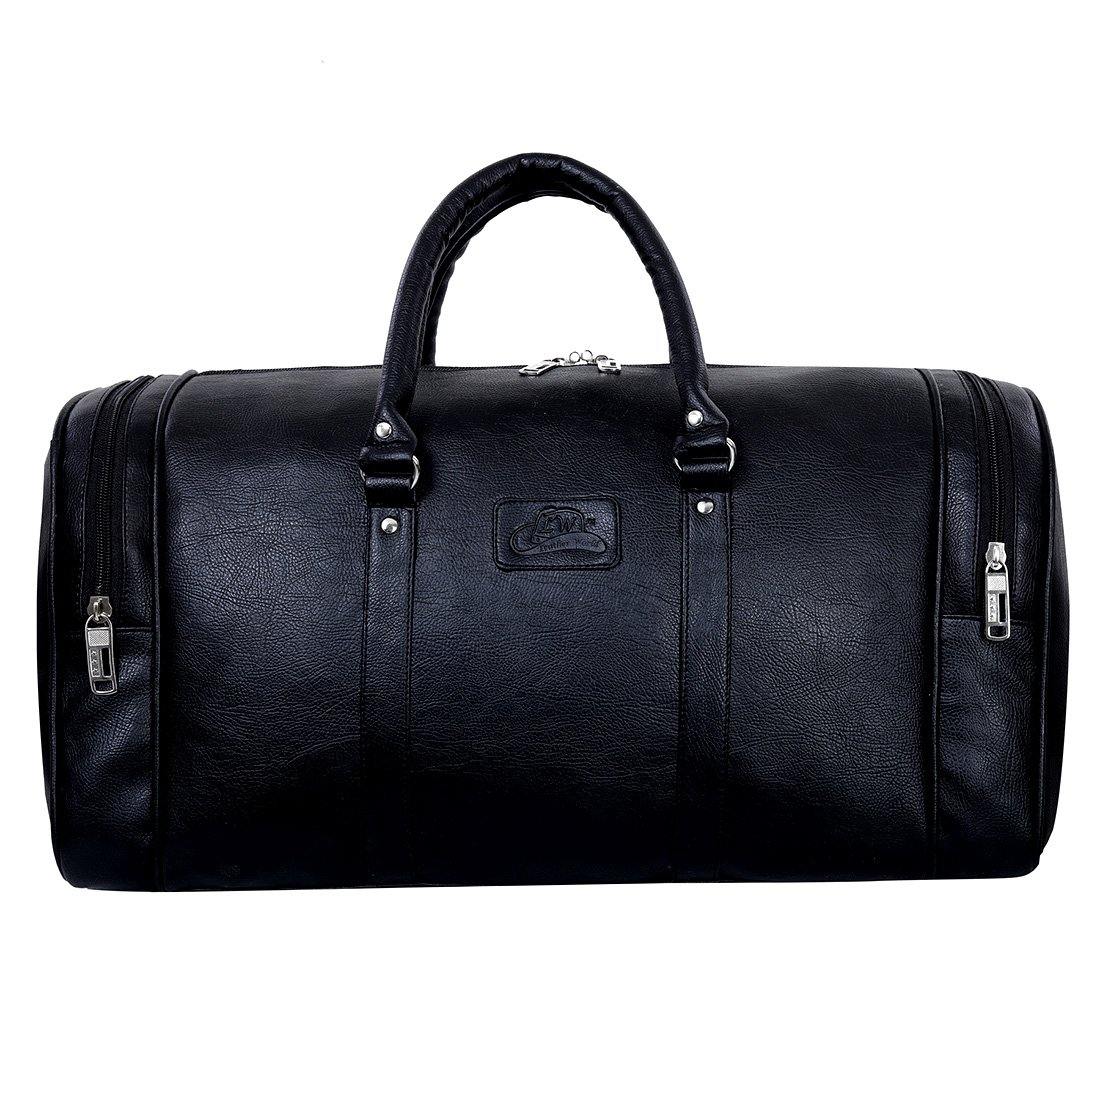 Black Duffel Bag, Holdall Bag, Leather Gym Bag